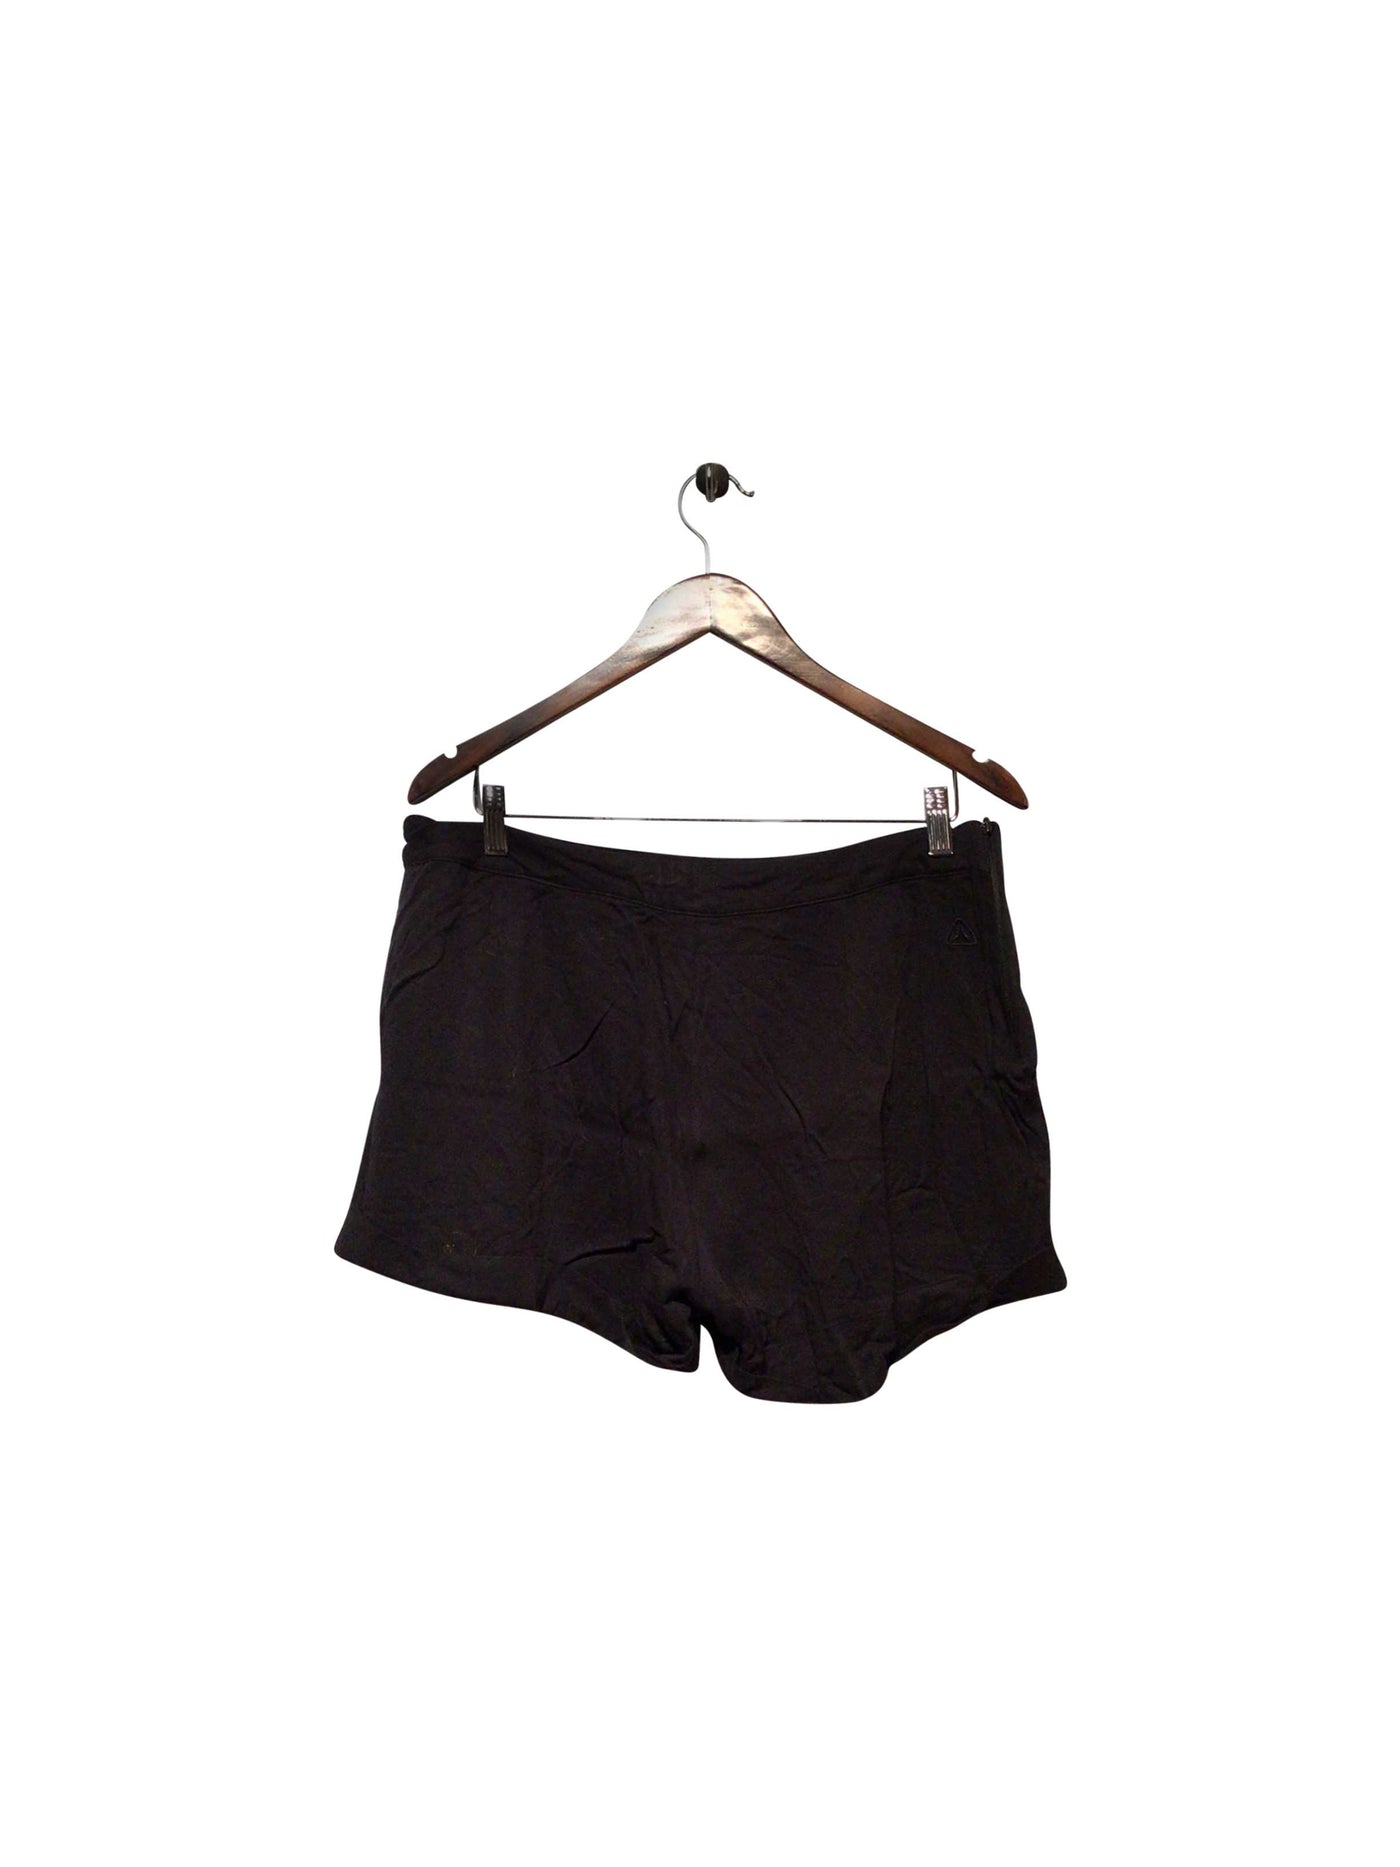 FIREFLY Regular fit Pant Shorts in Black  -  L  13.25 Koop